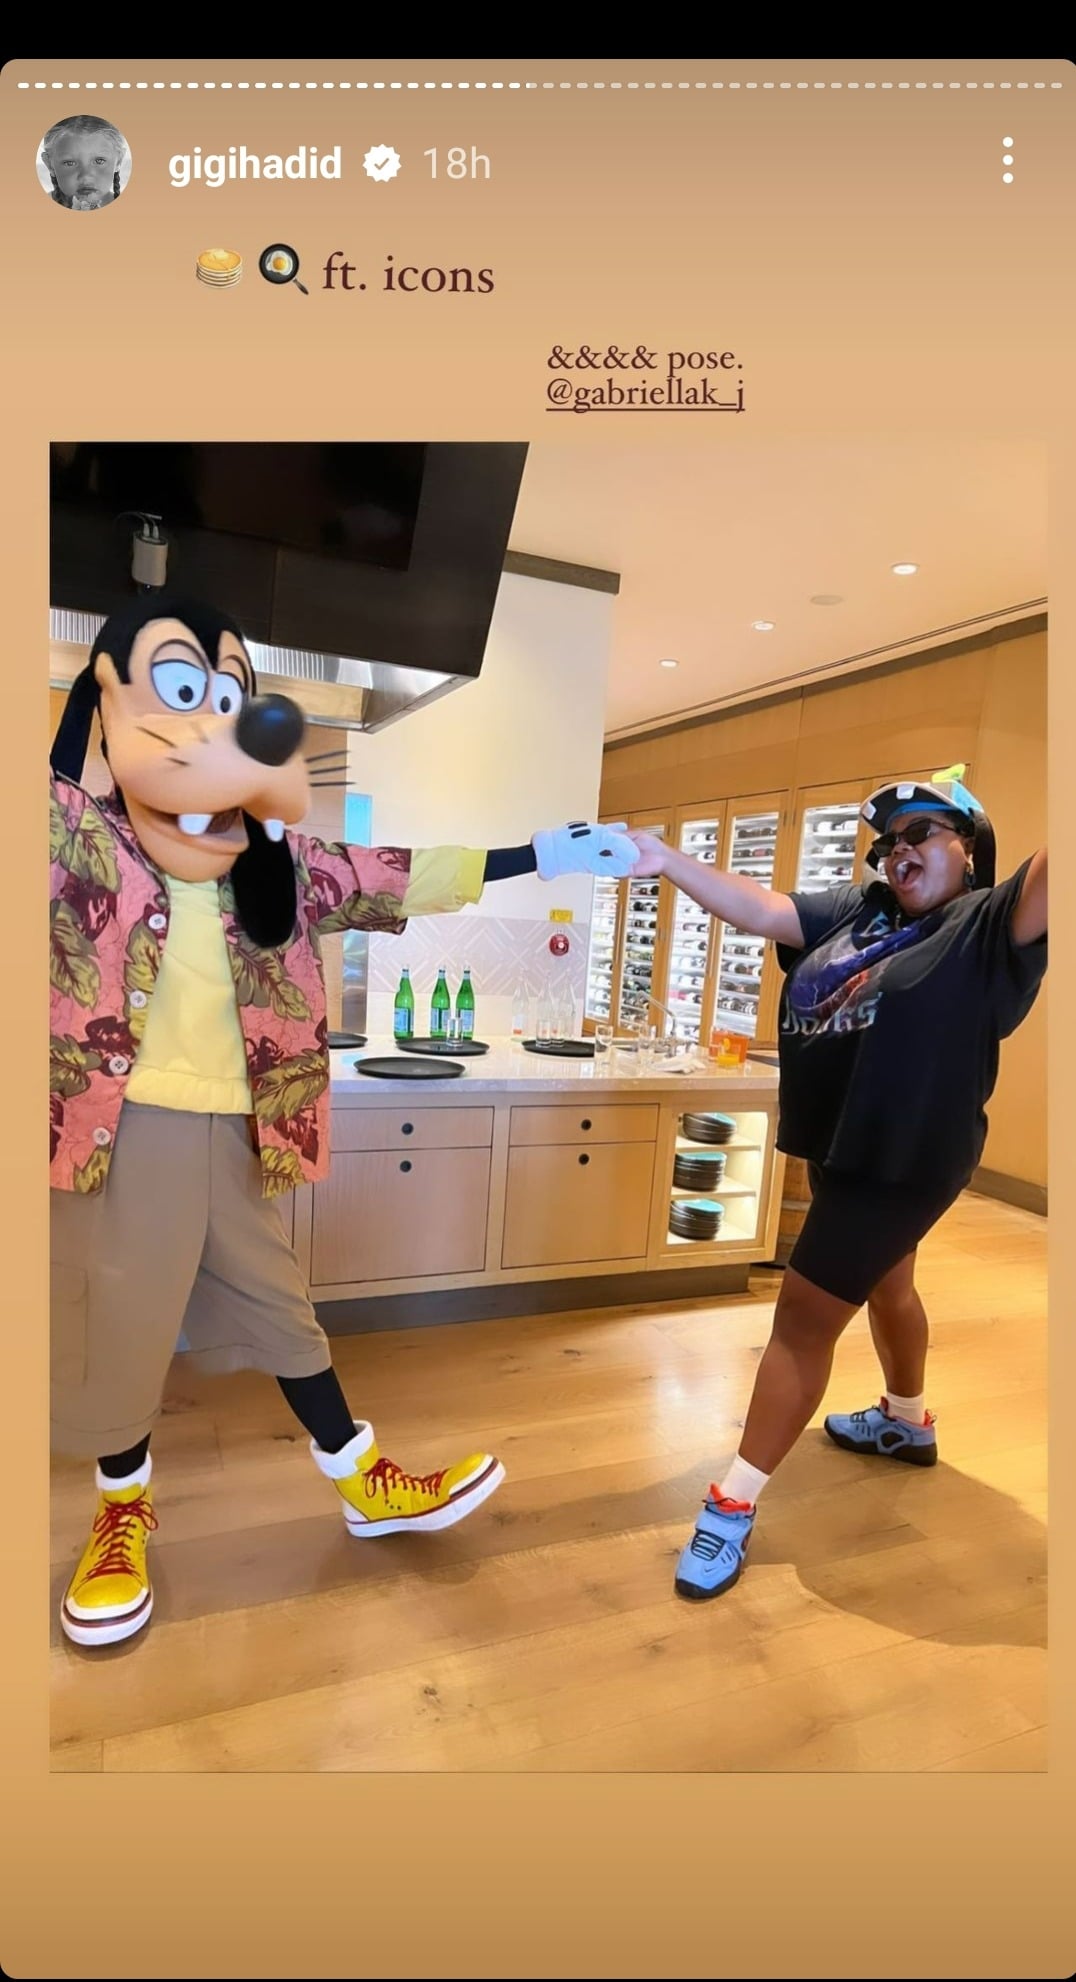 Gigi Hadid jets to Disney World for birthday celebrations